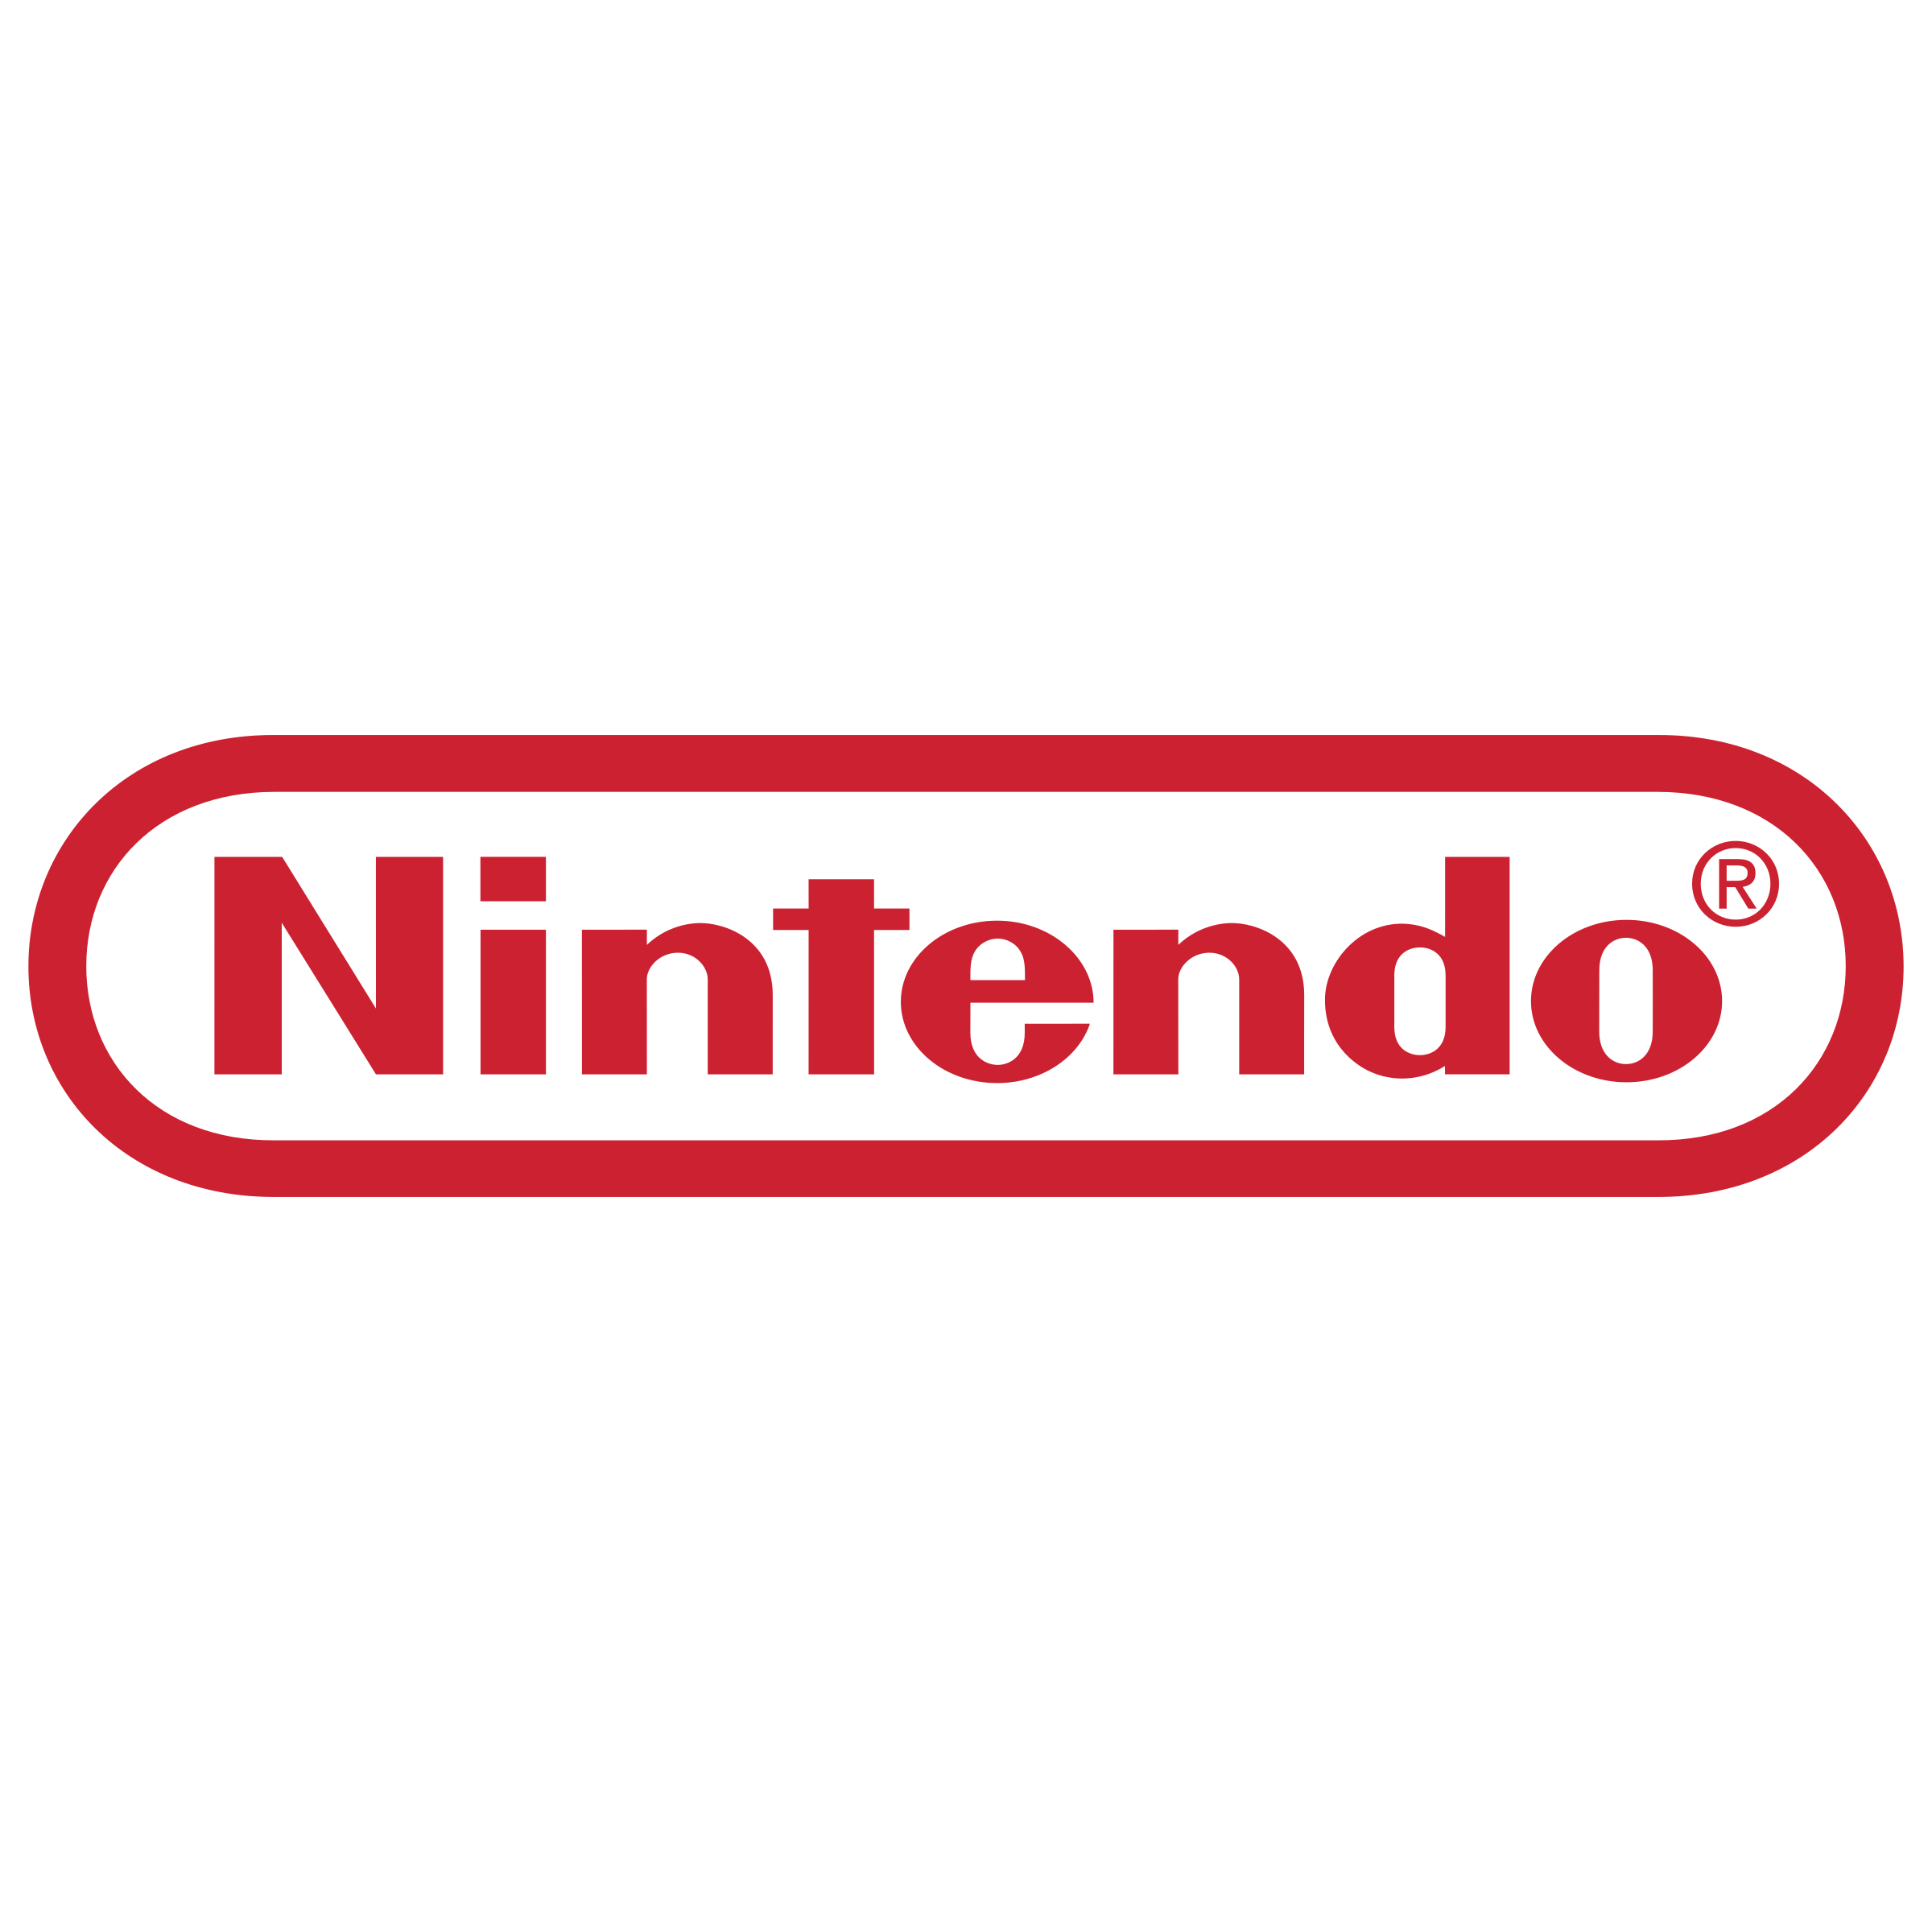 Nintendo Logo - Nintendo Logo PNG Transparent & SVG Vector